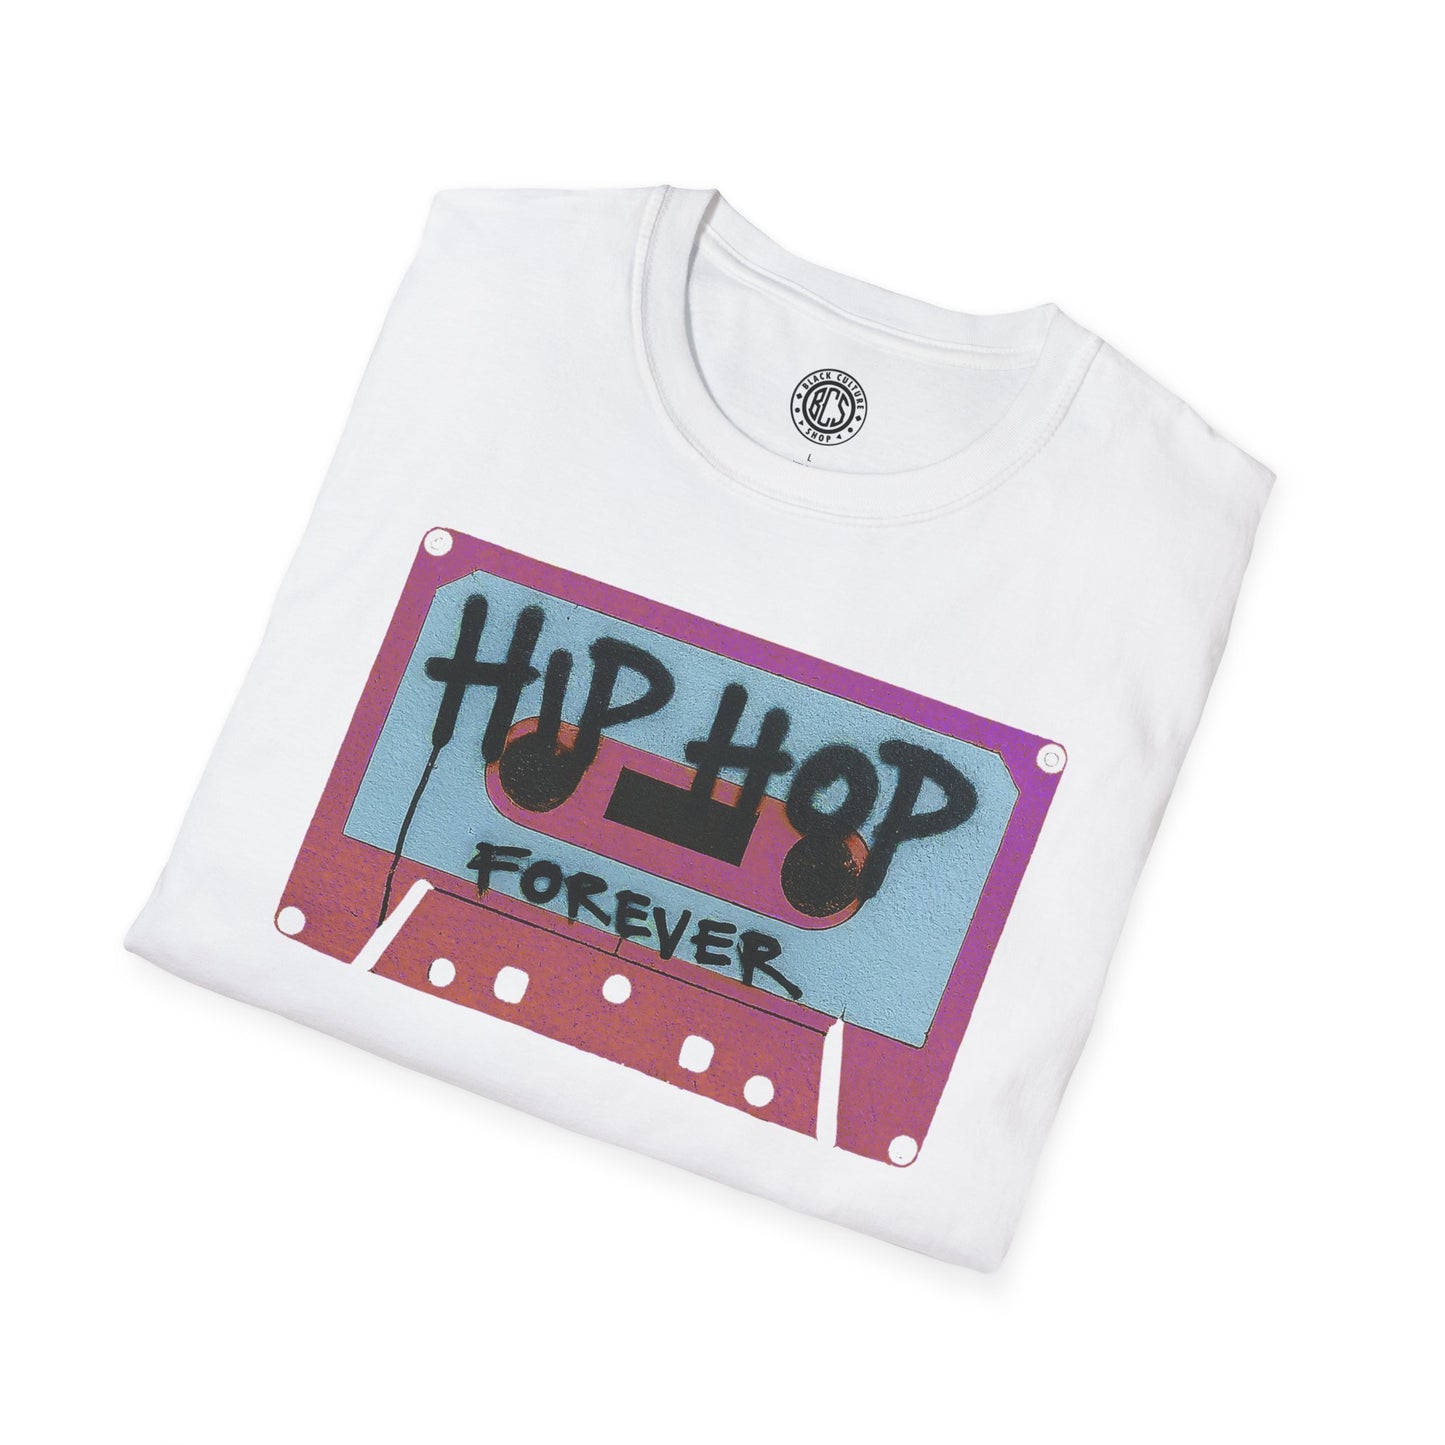 "Hip Hop Forever" Iridescent Cassette Tap - Unisex T-shirt